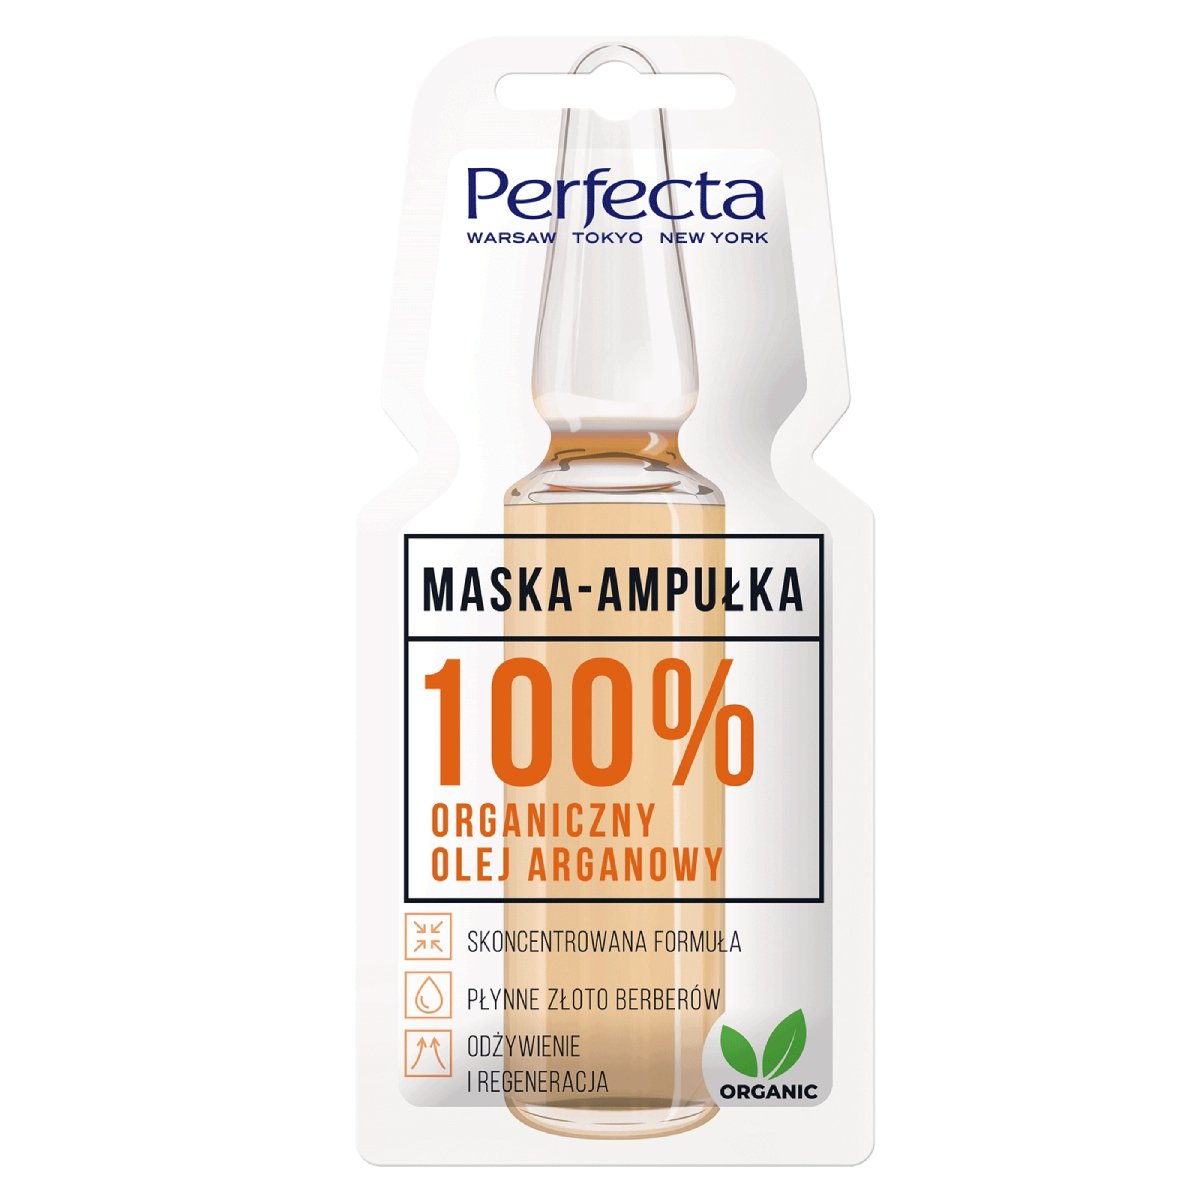 Perfecta Maska-ampułka 100% organiczny olej arganowy